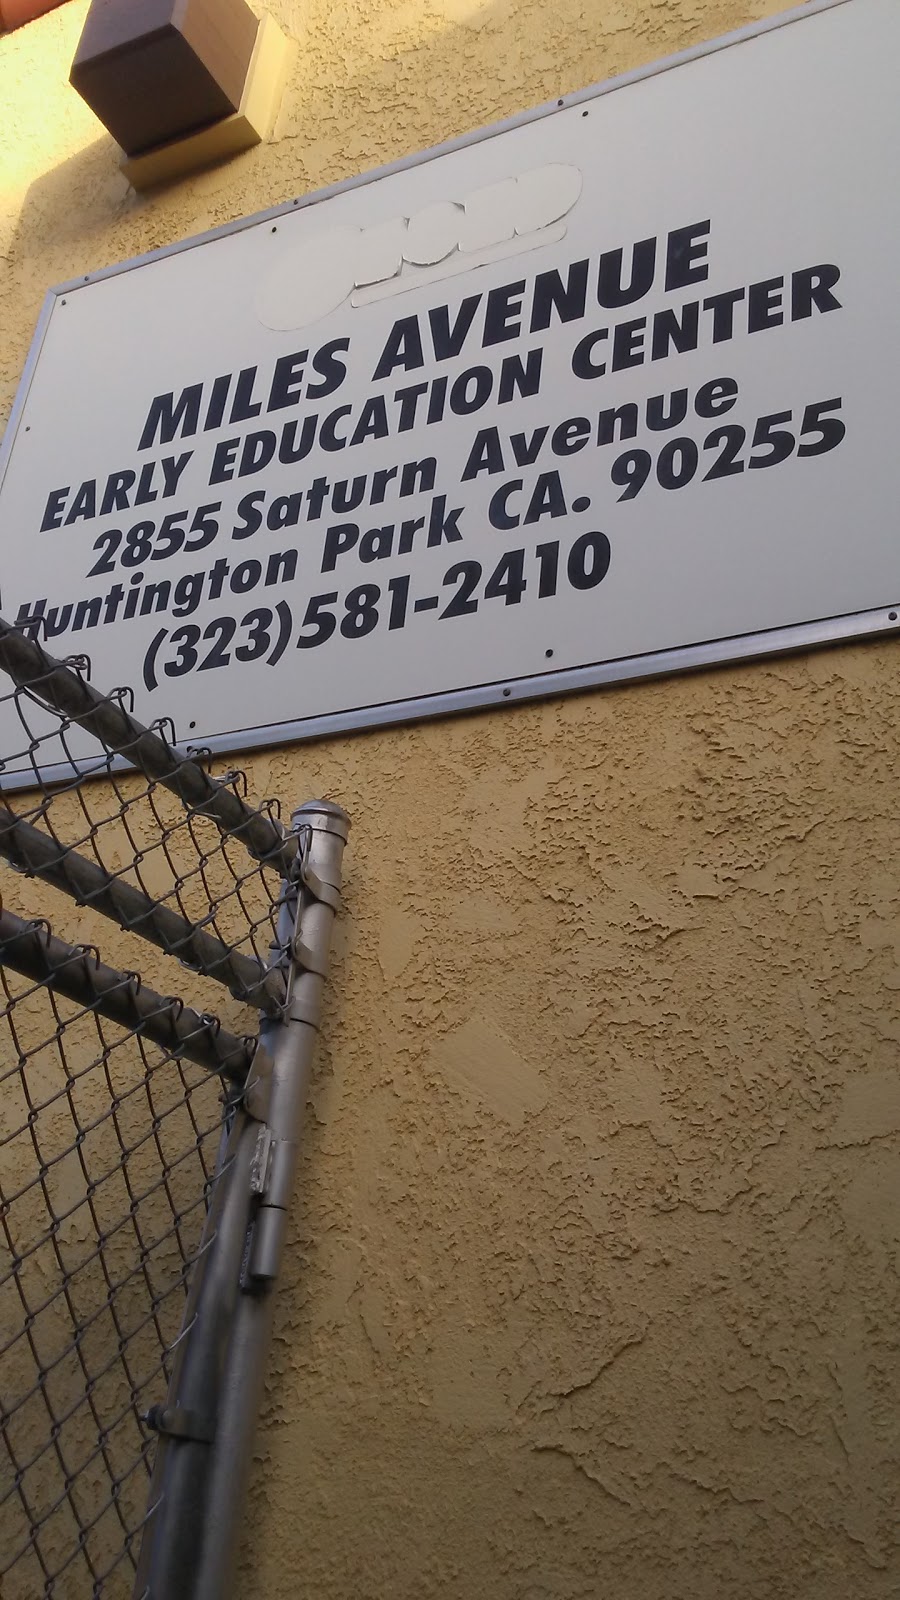 Miles Avenue Early Education Center | 2855 Saturn Ave, Huntington Park, CA 90255 | Phone: (323) 581-2410